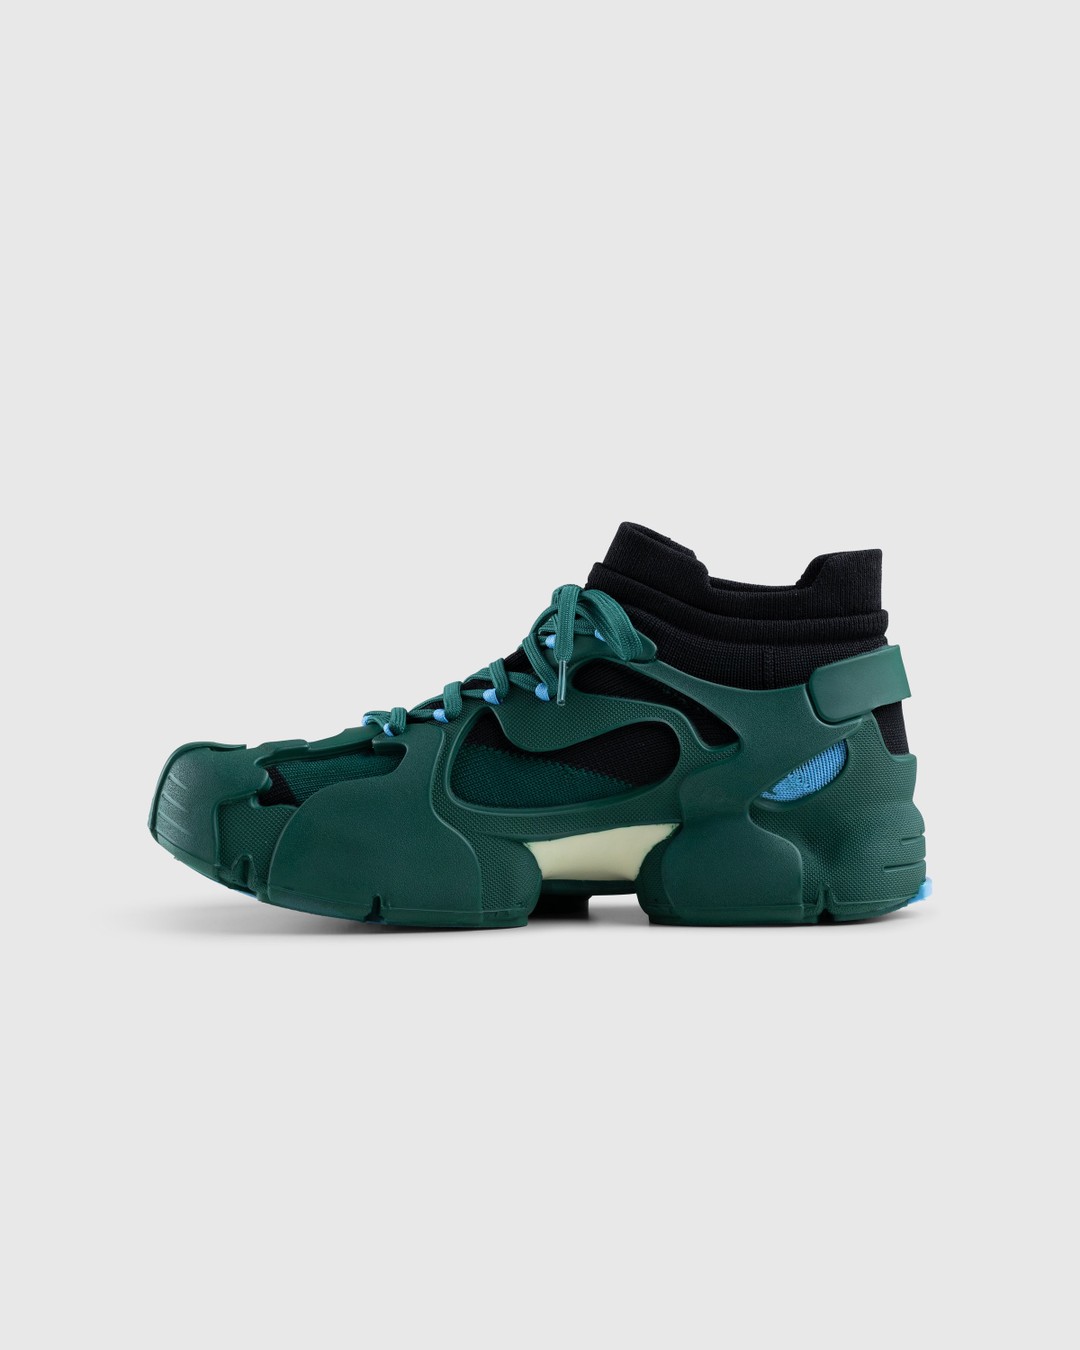 CAMPERLAB – Tossu Green - High Top Sneakers - Green - Image 2